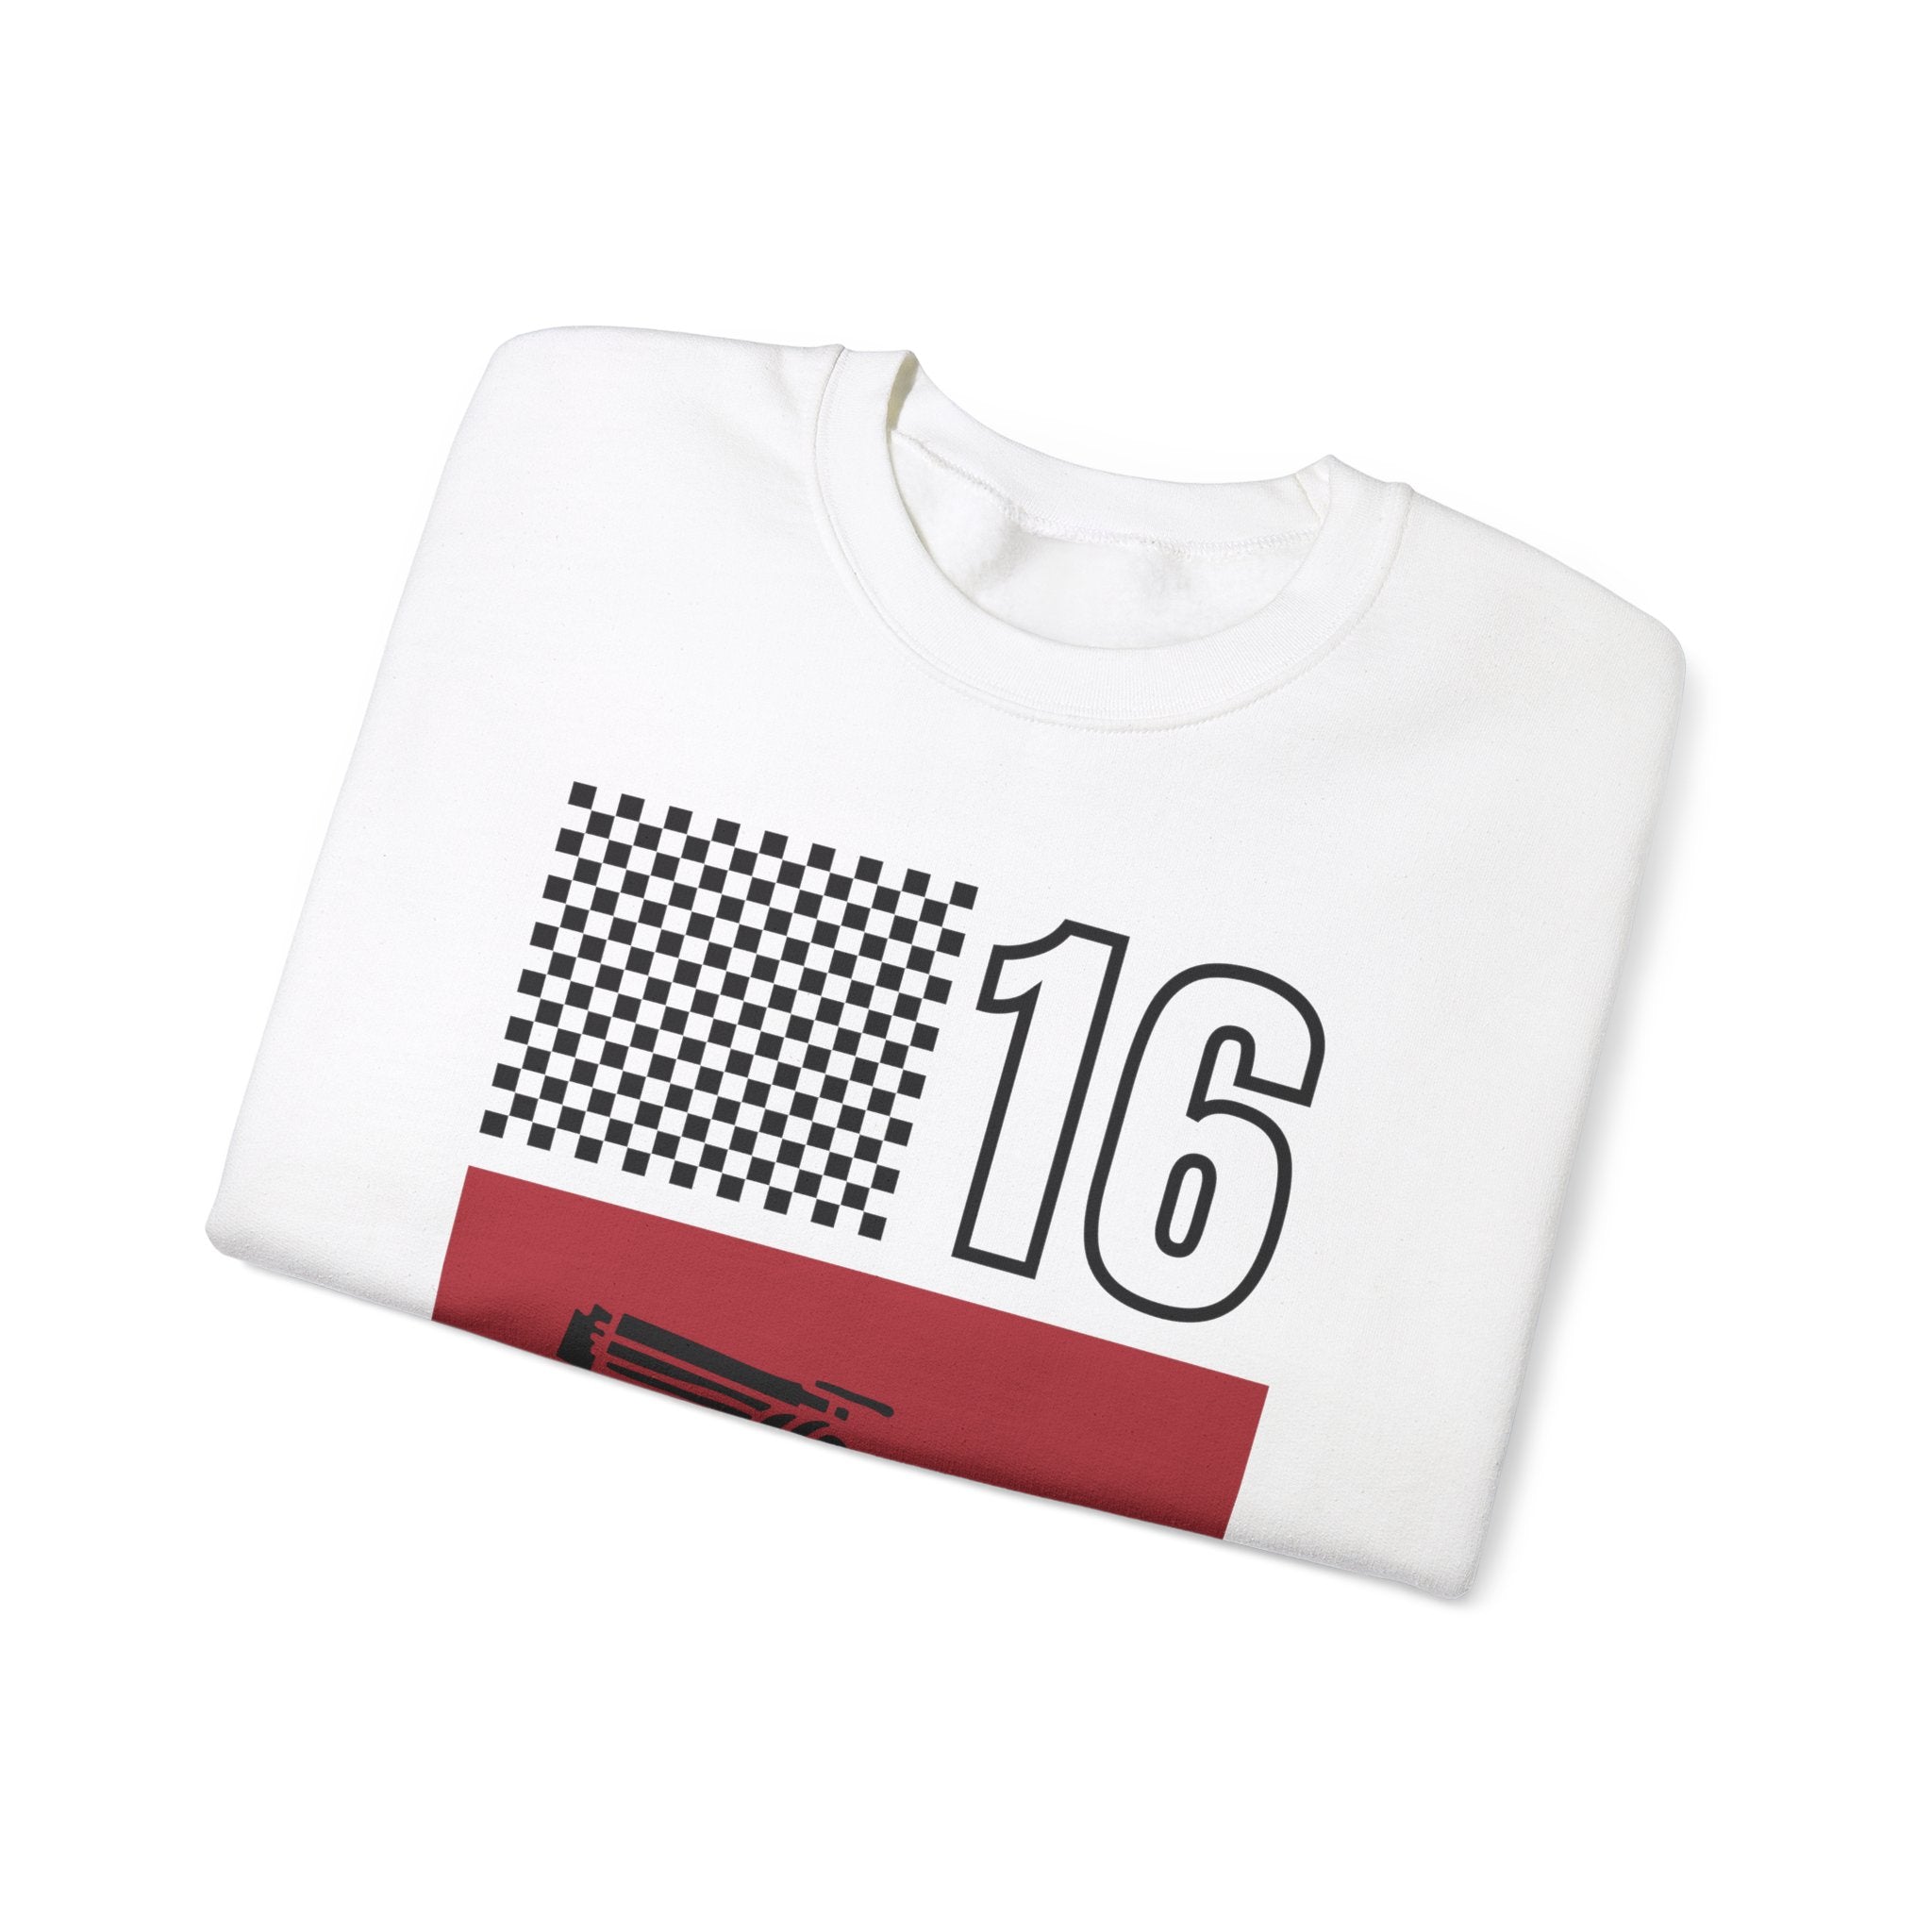 LEC16 Crewneck Sweatshirt - FormulaFanatics